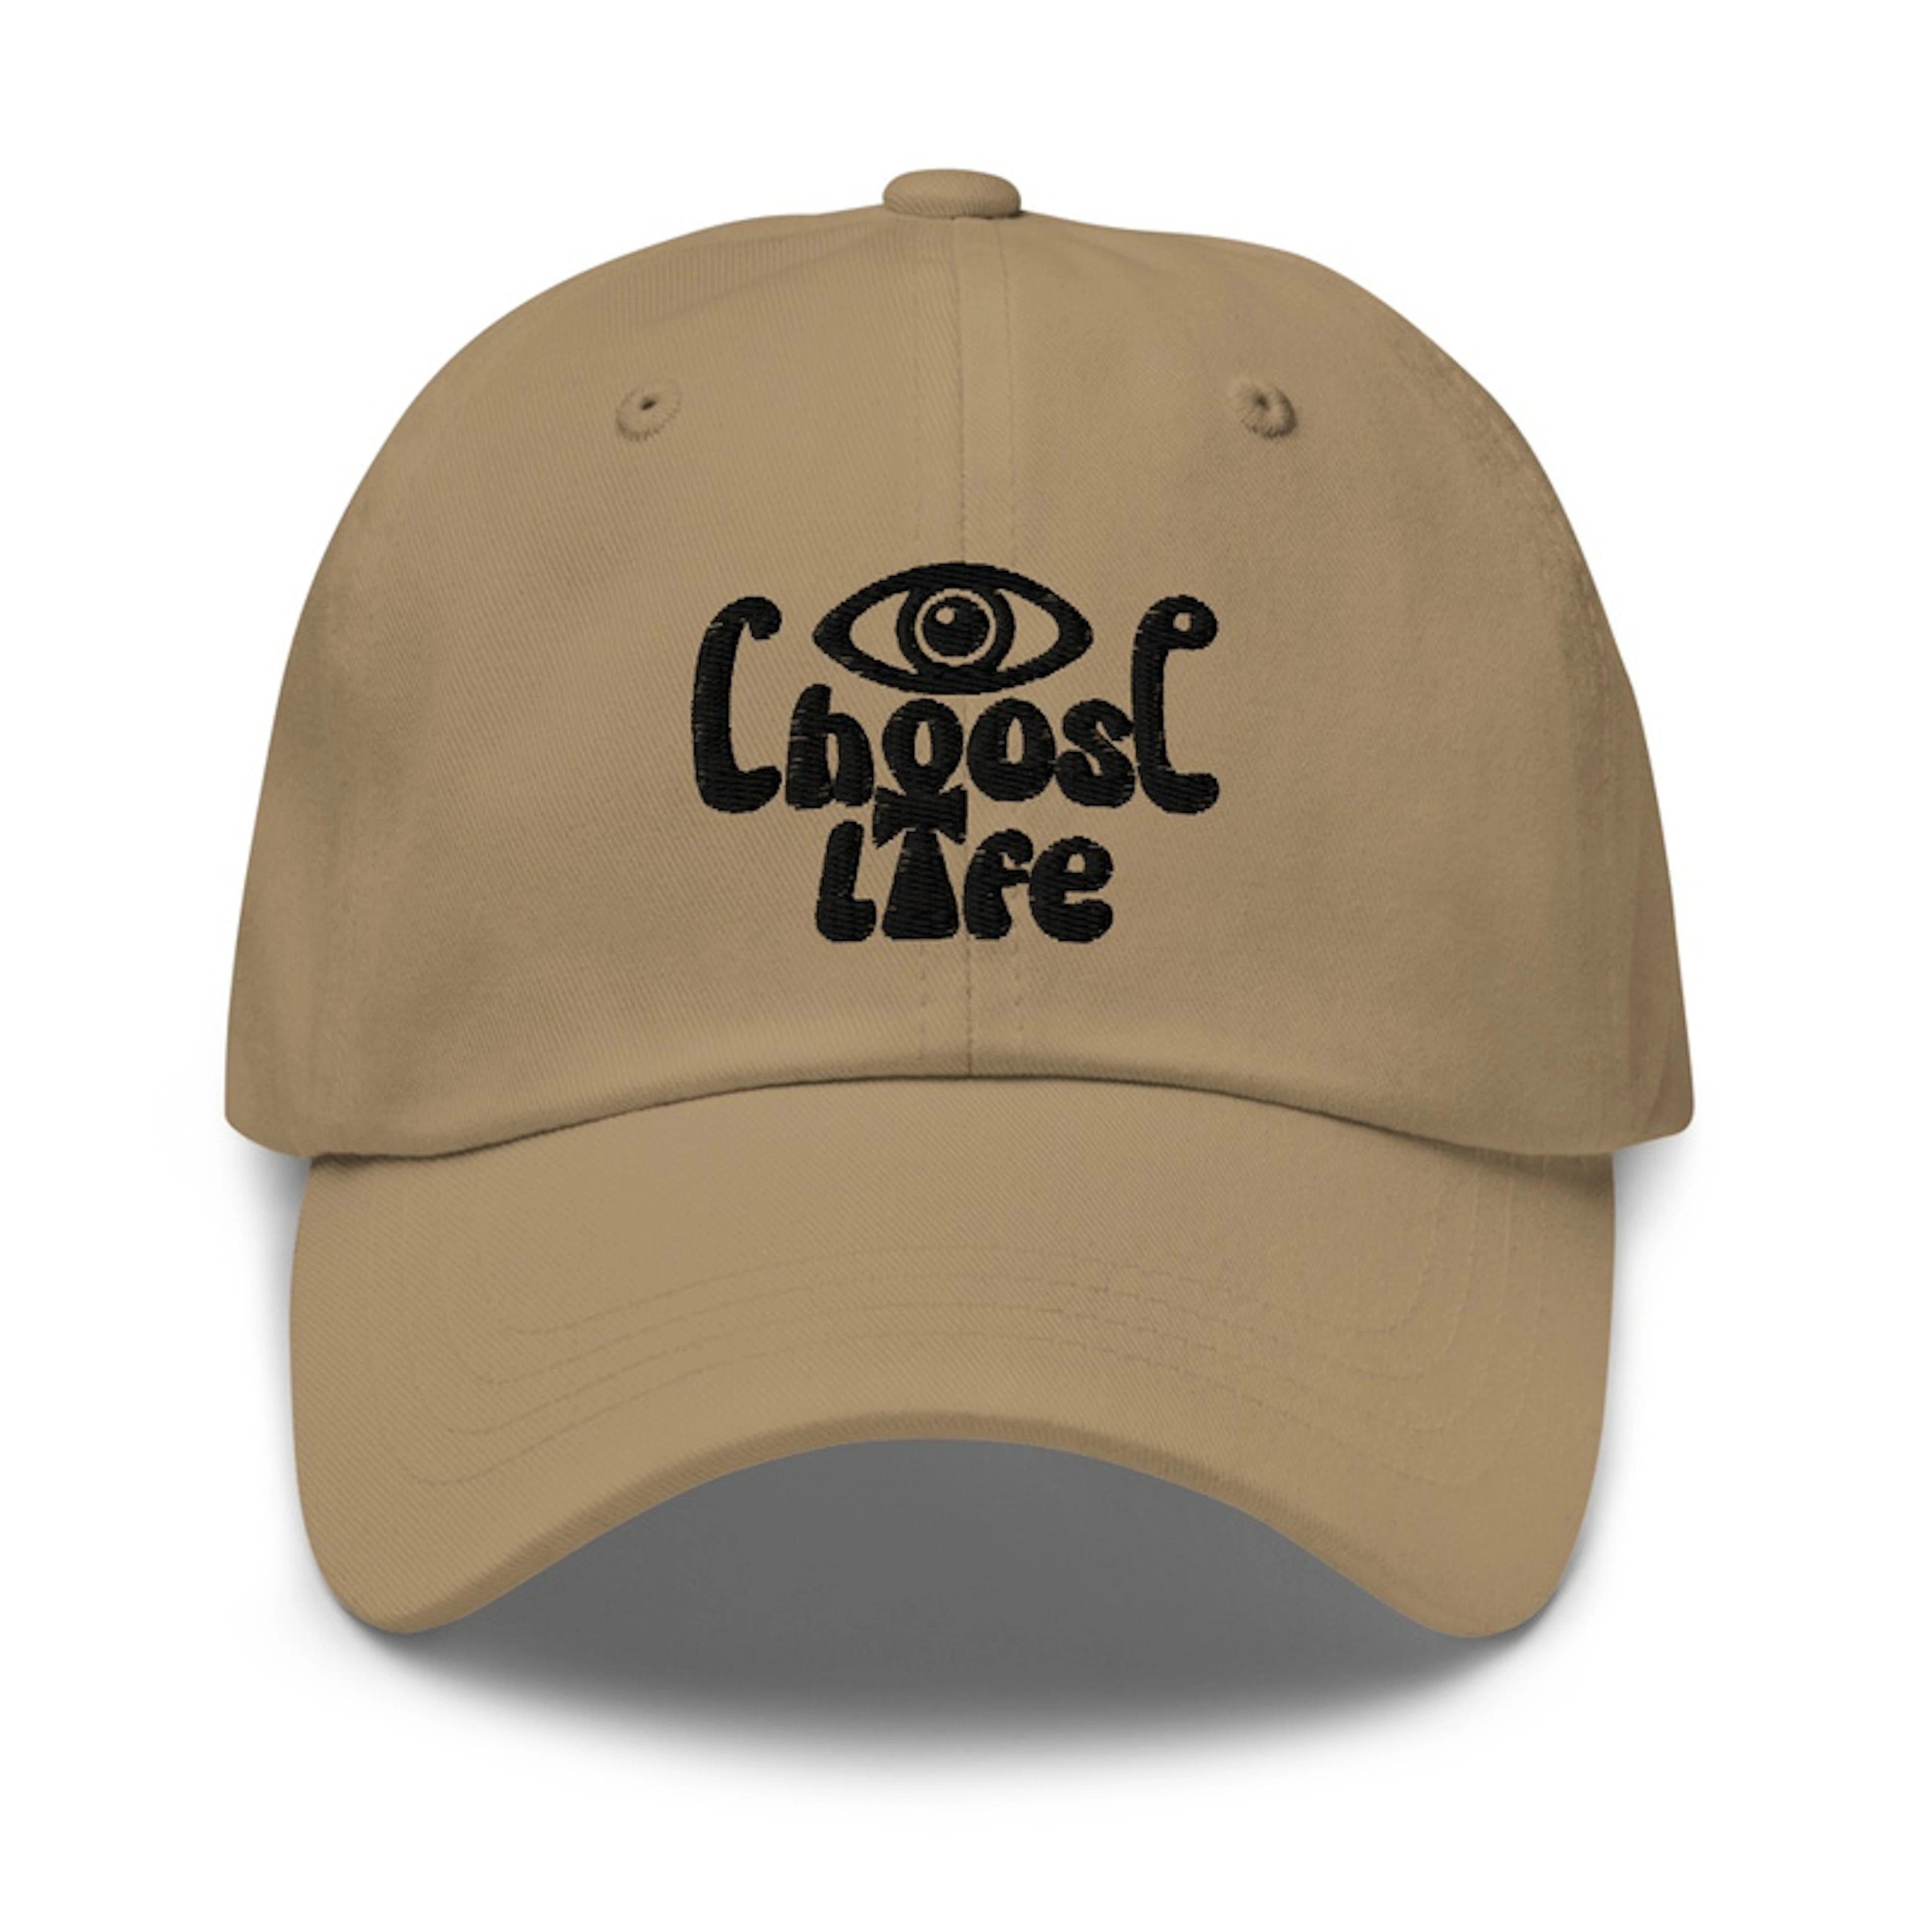 EyeChooseLife Hat